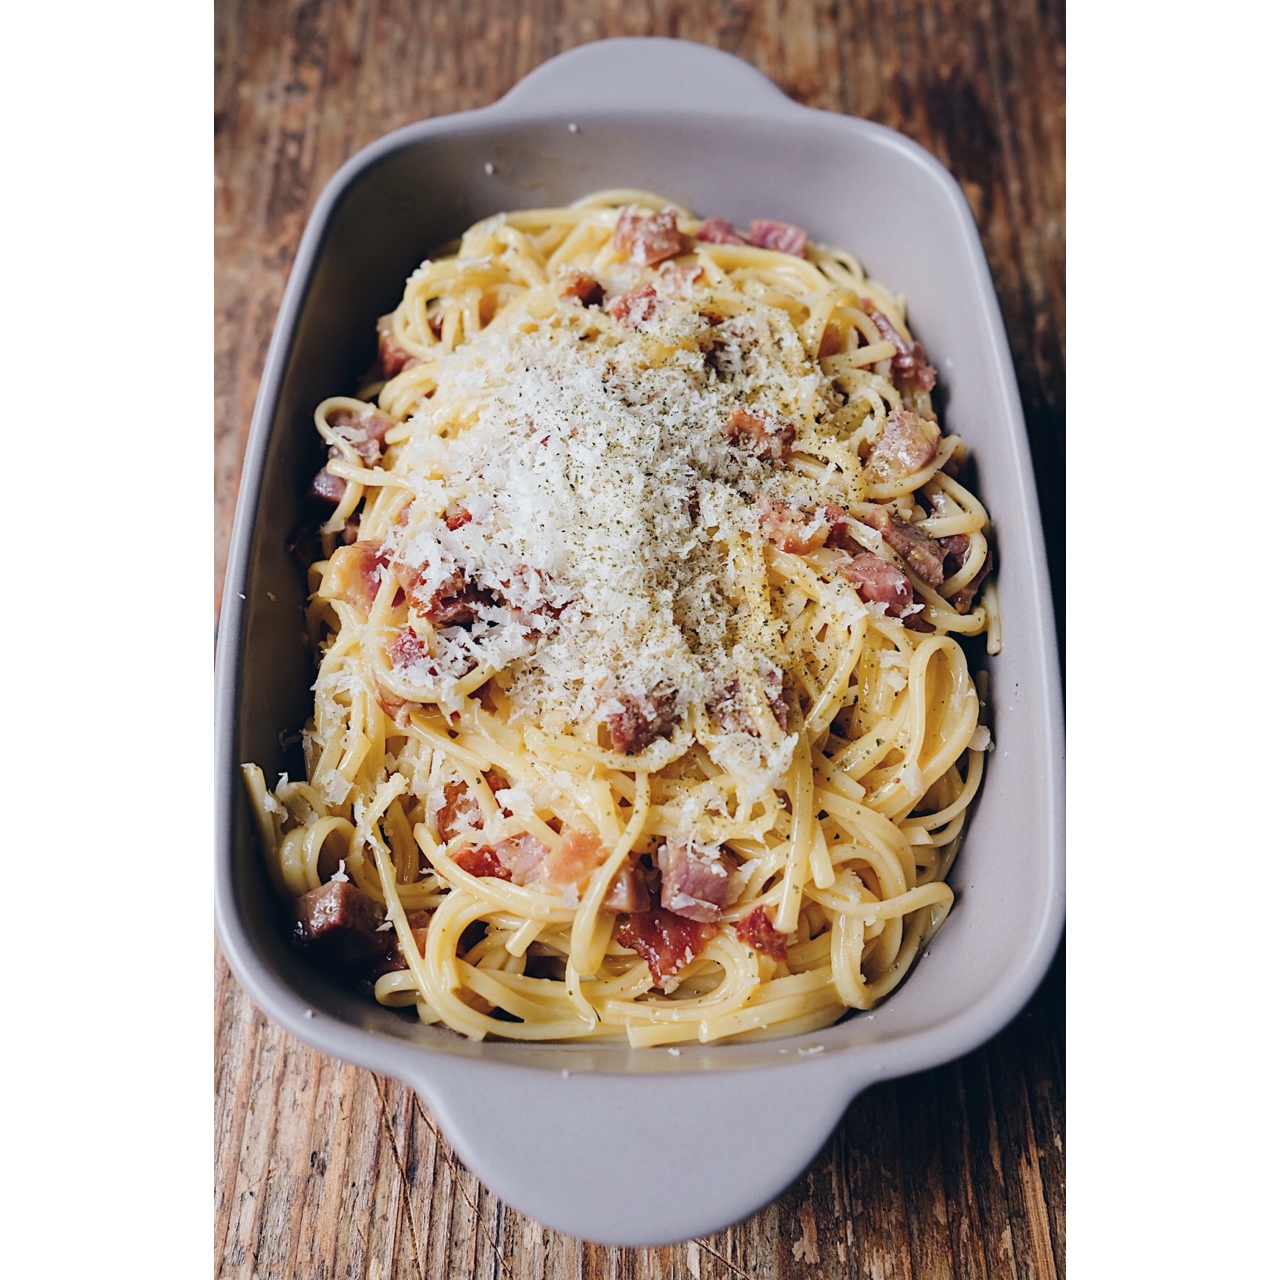 Spaghetti Carbonara 意式咸肉芝士意粉